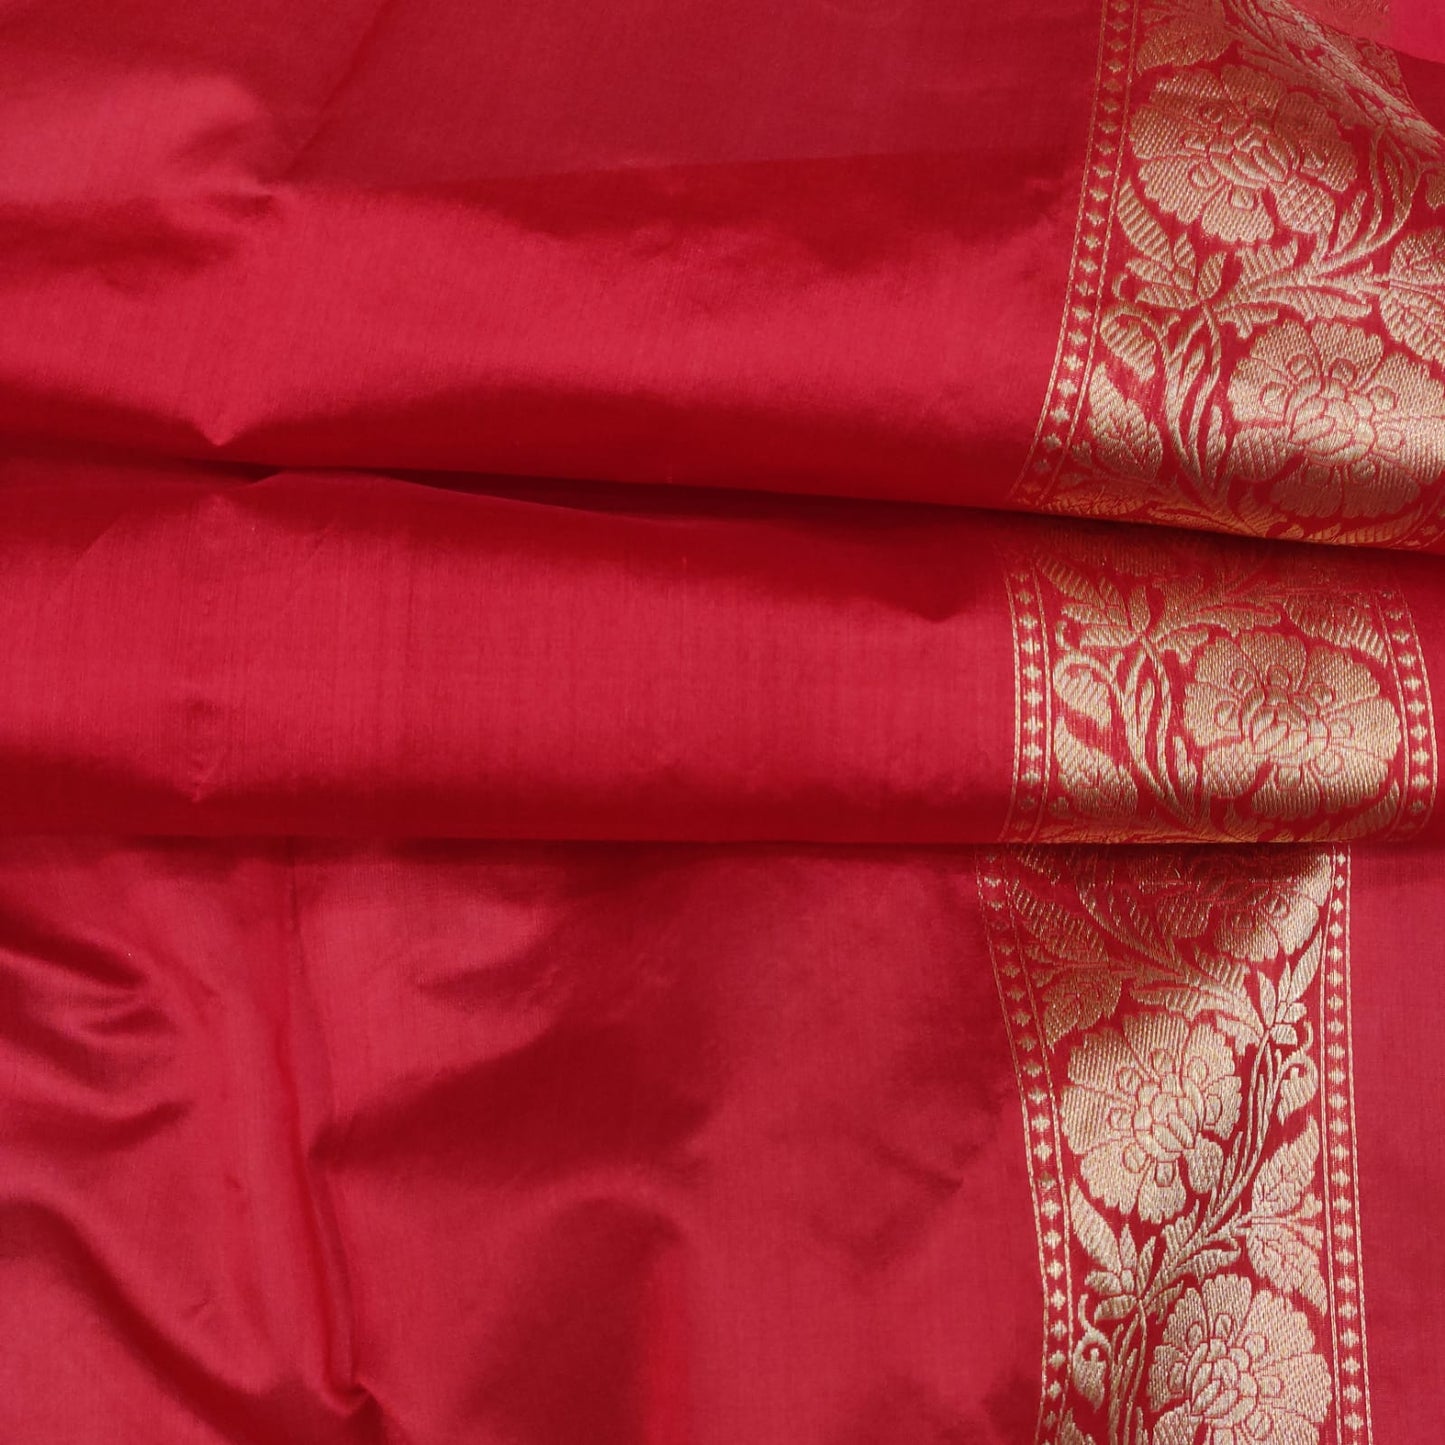 Aliva Kora Indian sari